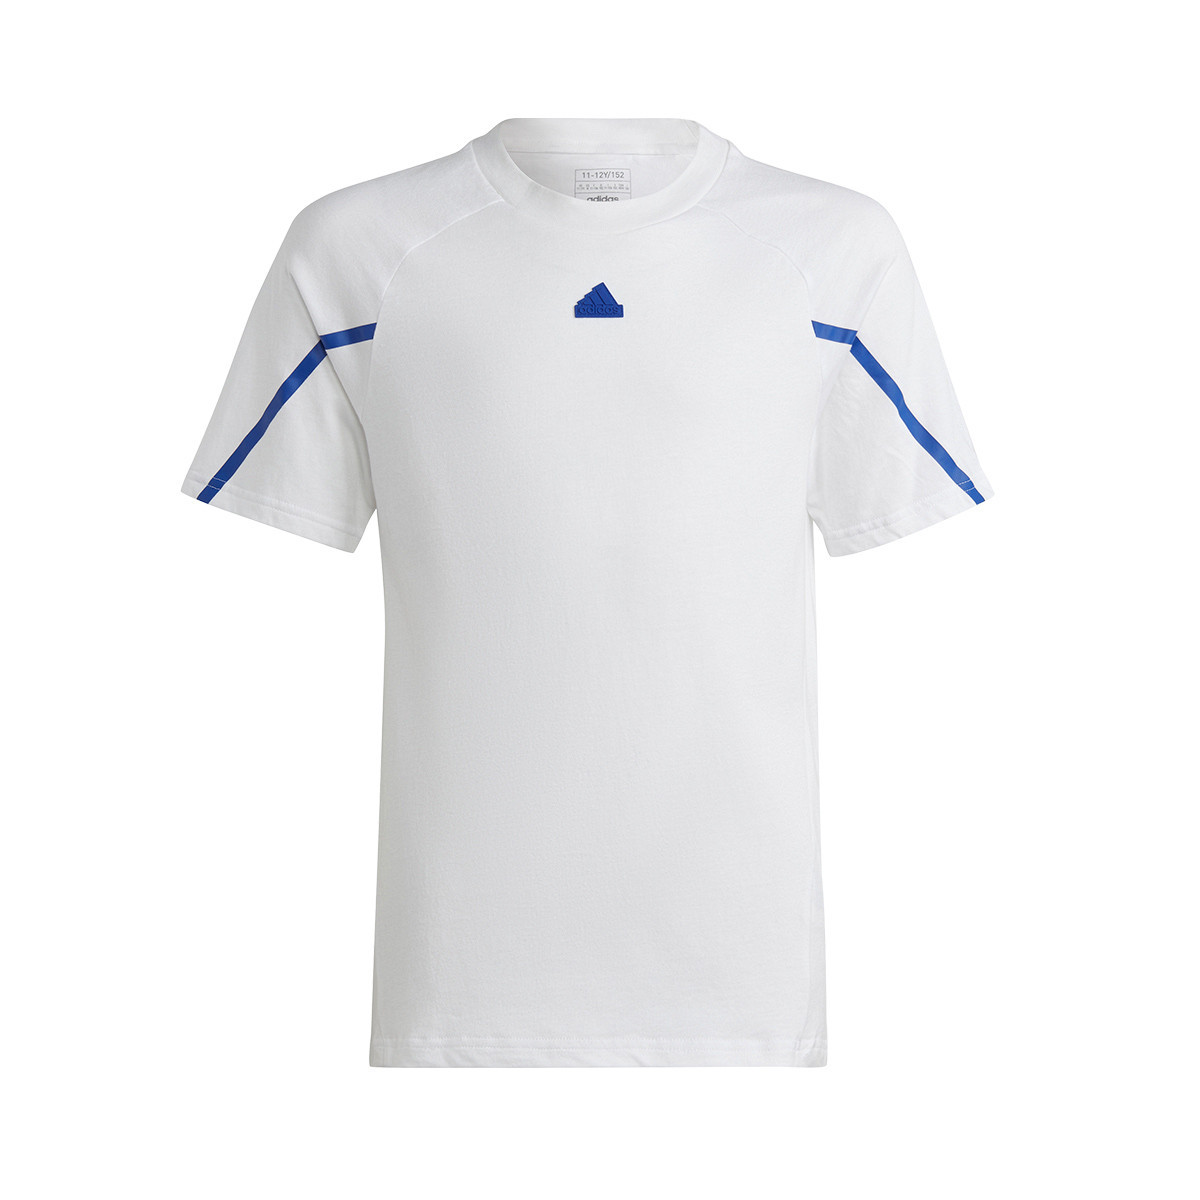 Kids Jersey White-Semi Blue Icons Lucid Emotion adidas Future Fútbol Logo -